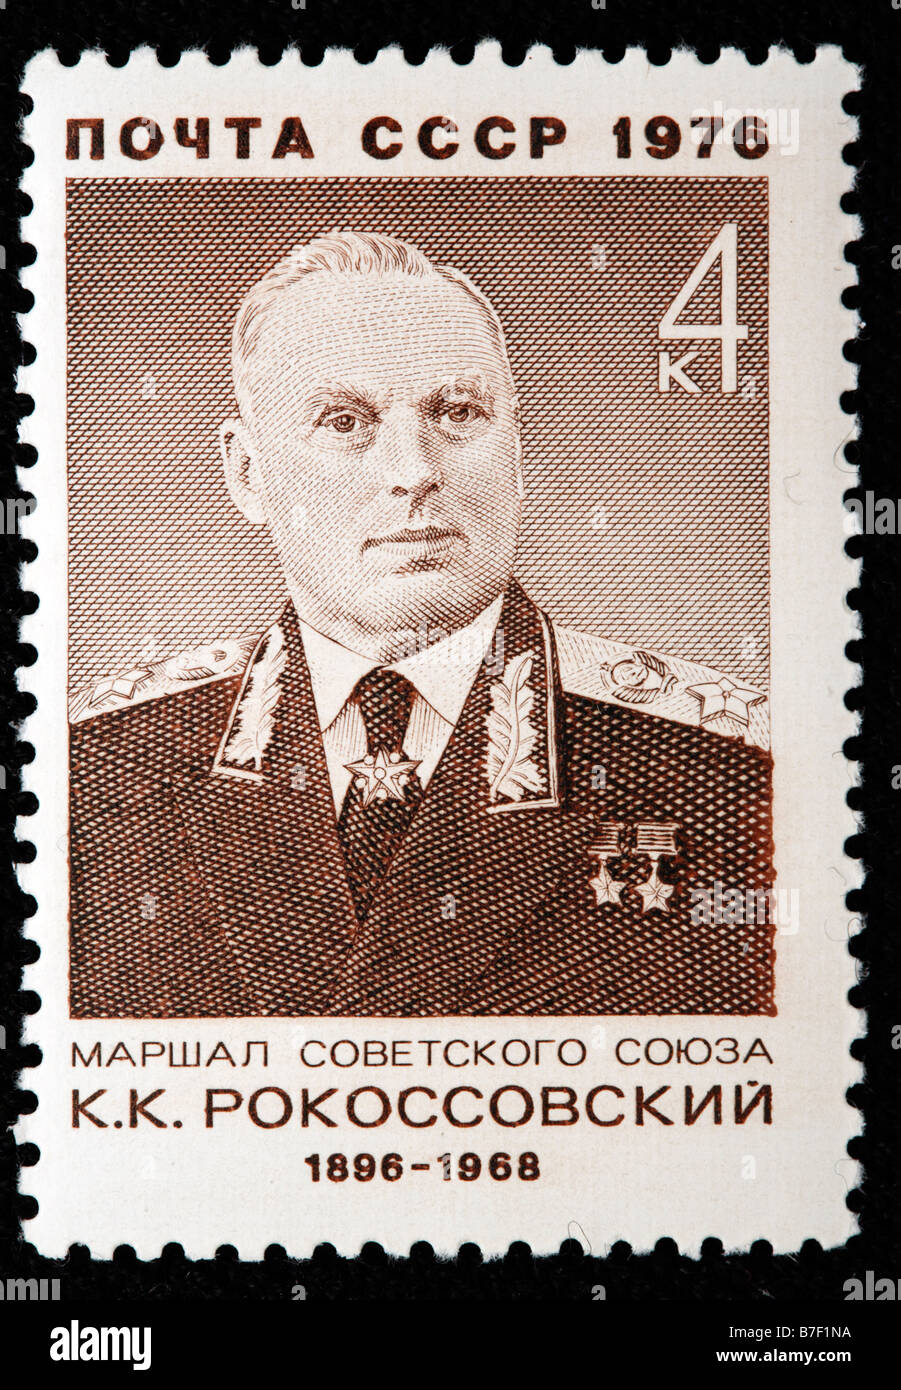 Konstantin Rokossovsky (1896-1968), Soviet military commander, Marshal, postage stamp, USSR, Russia, 1976 Stock Photo